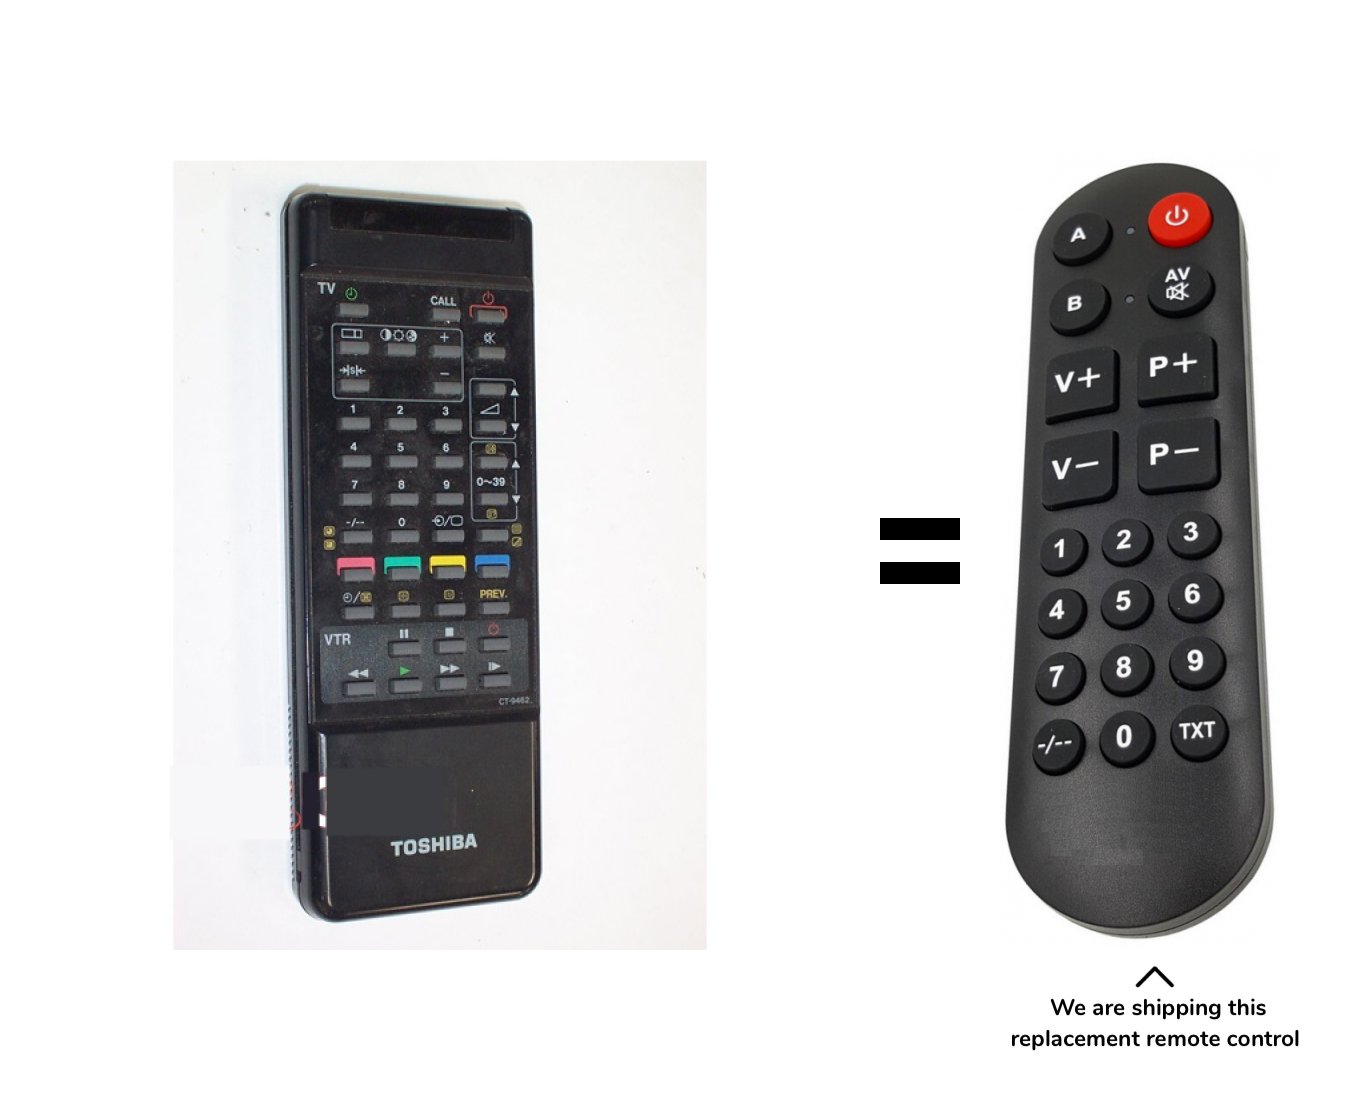 Toshiba 175R9T–17 remote control for seniors